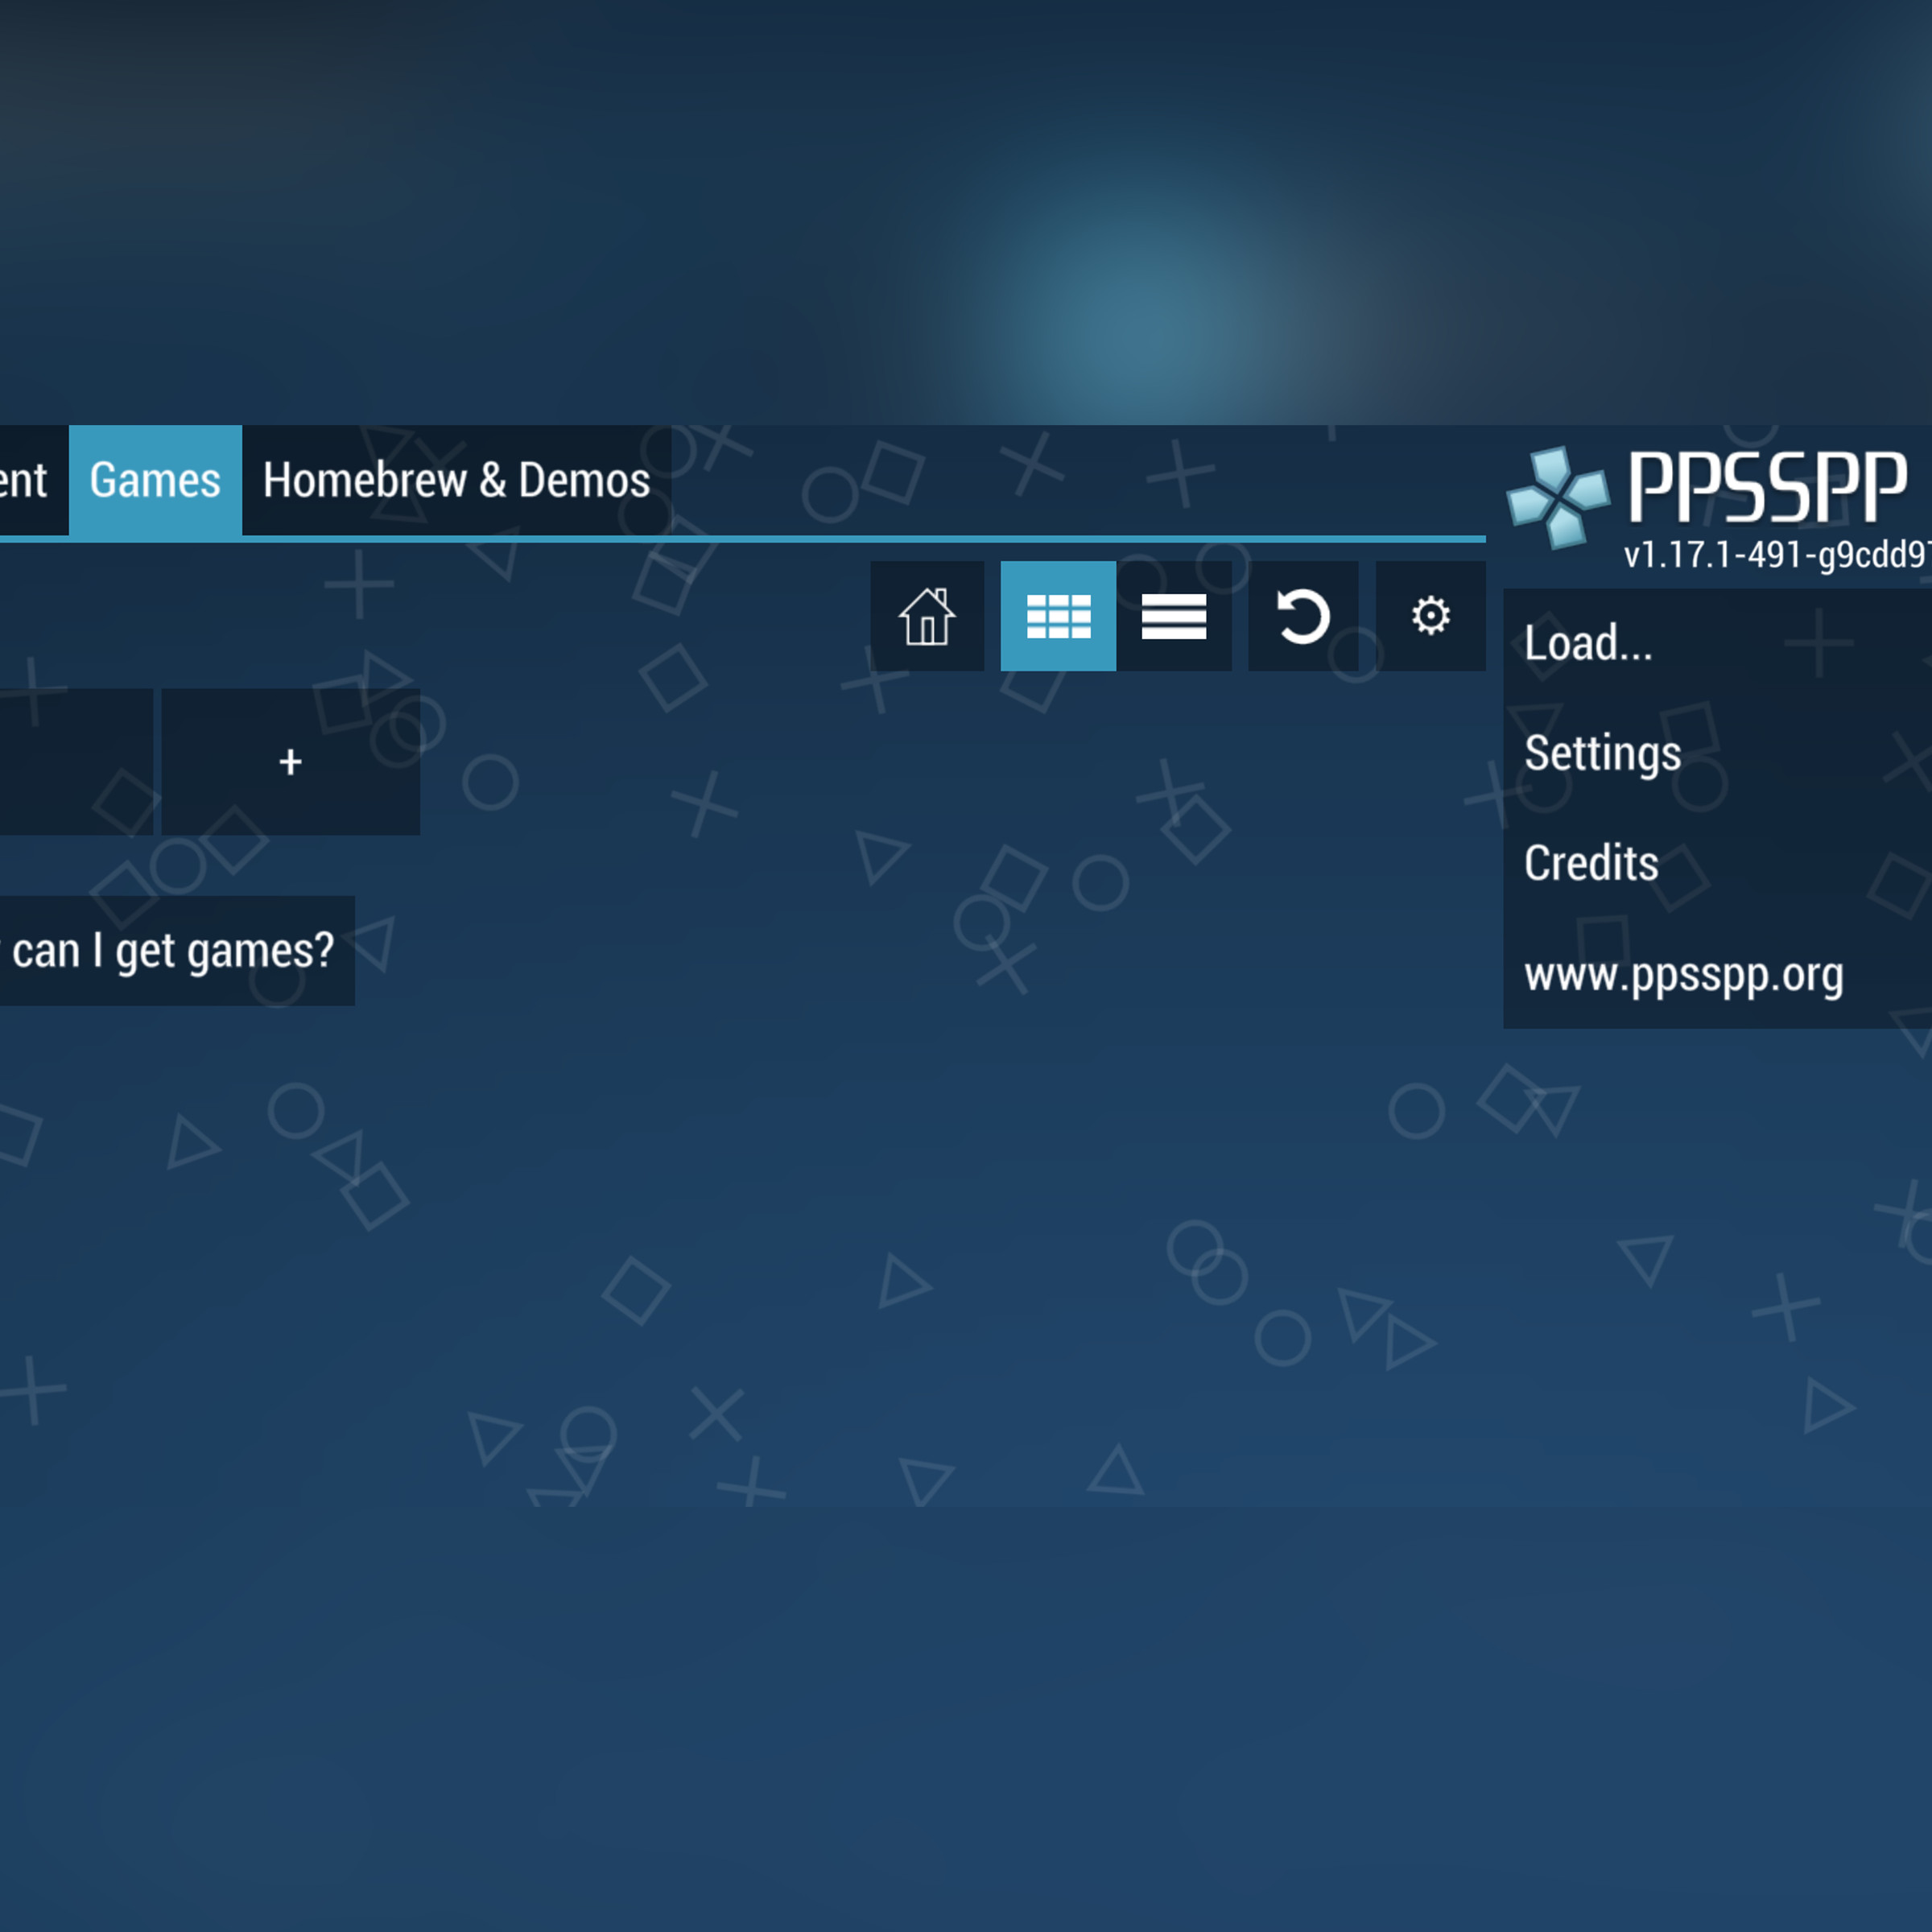 A screenshot of the PPSSPP app.